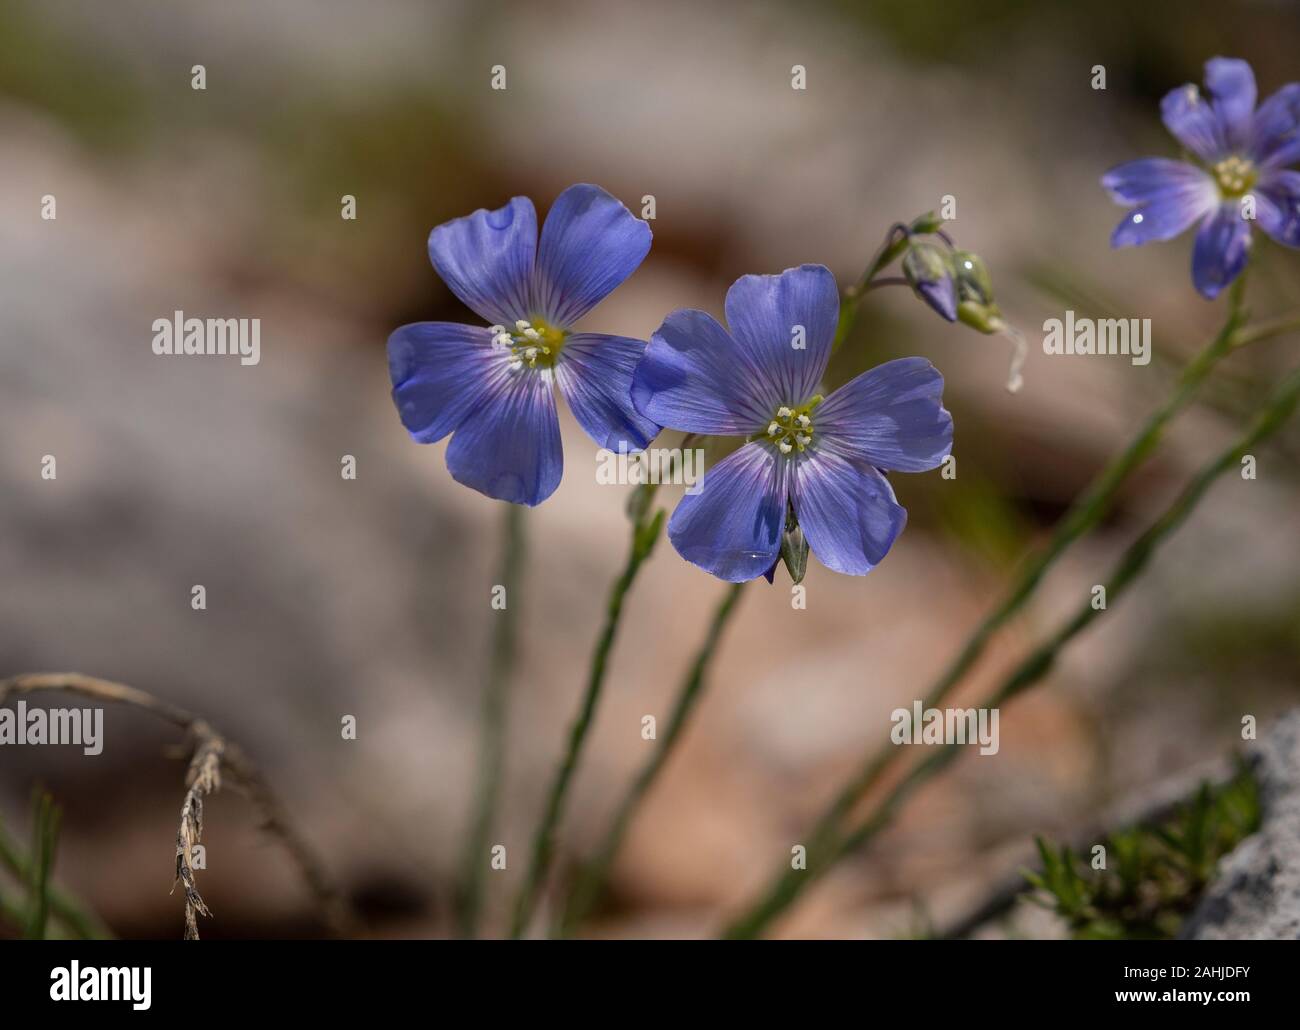 A blue alpine flax, Linum austriacum in flower on limestone cliff, Mlount Biokovo, Croatia. Stock Photo